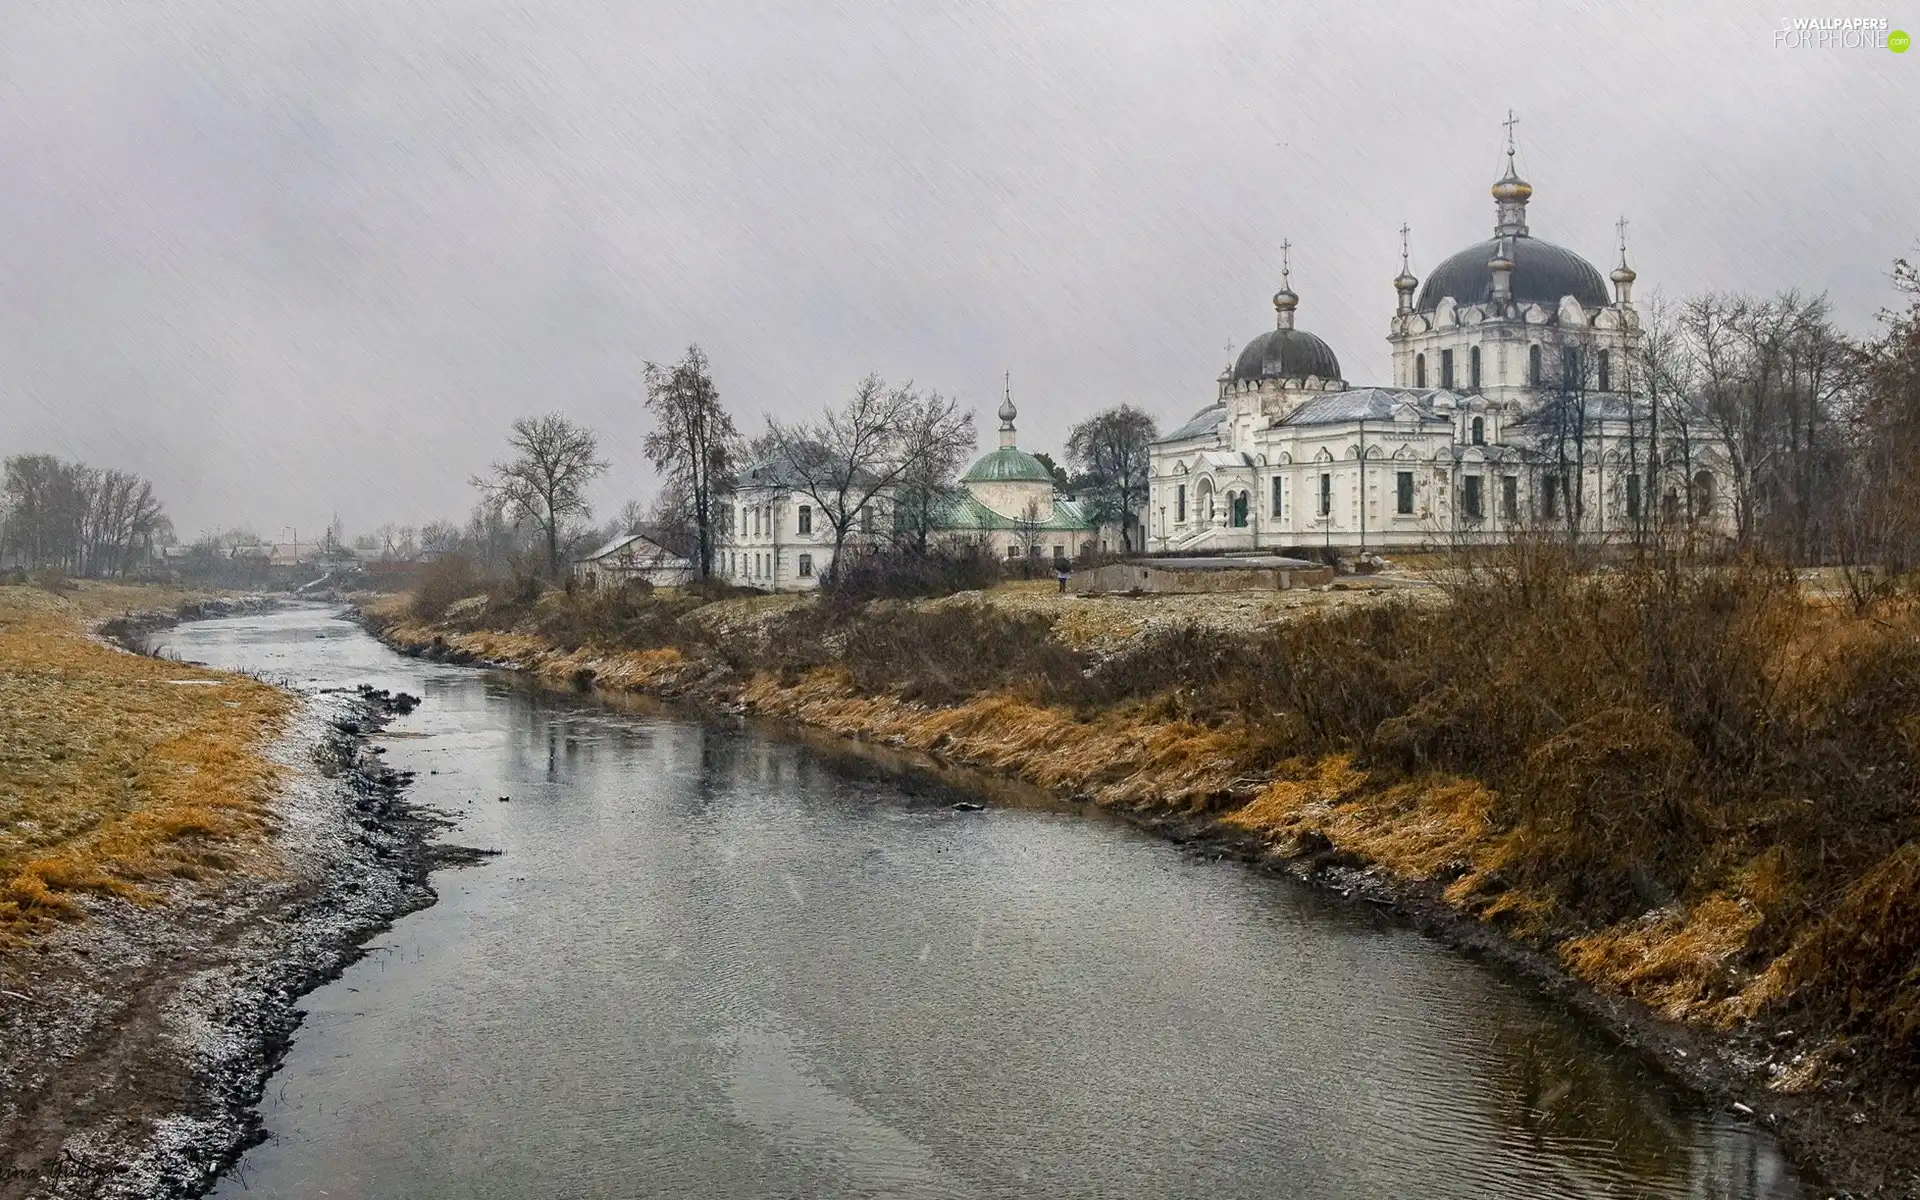 Rain, River, Church, weather